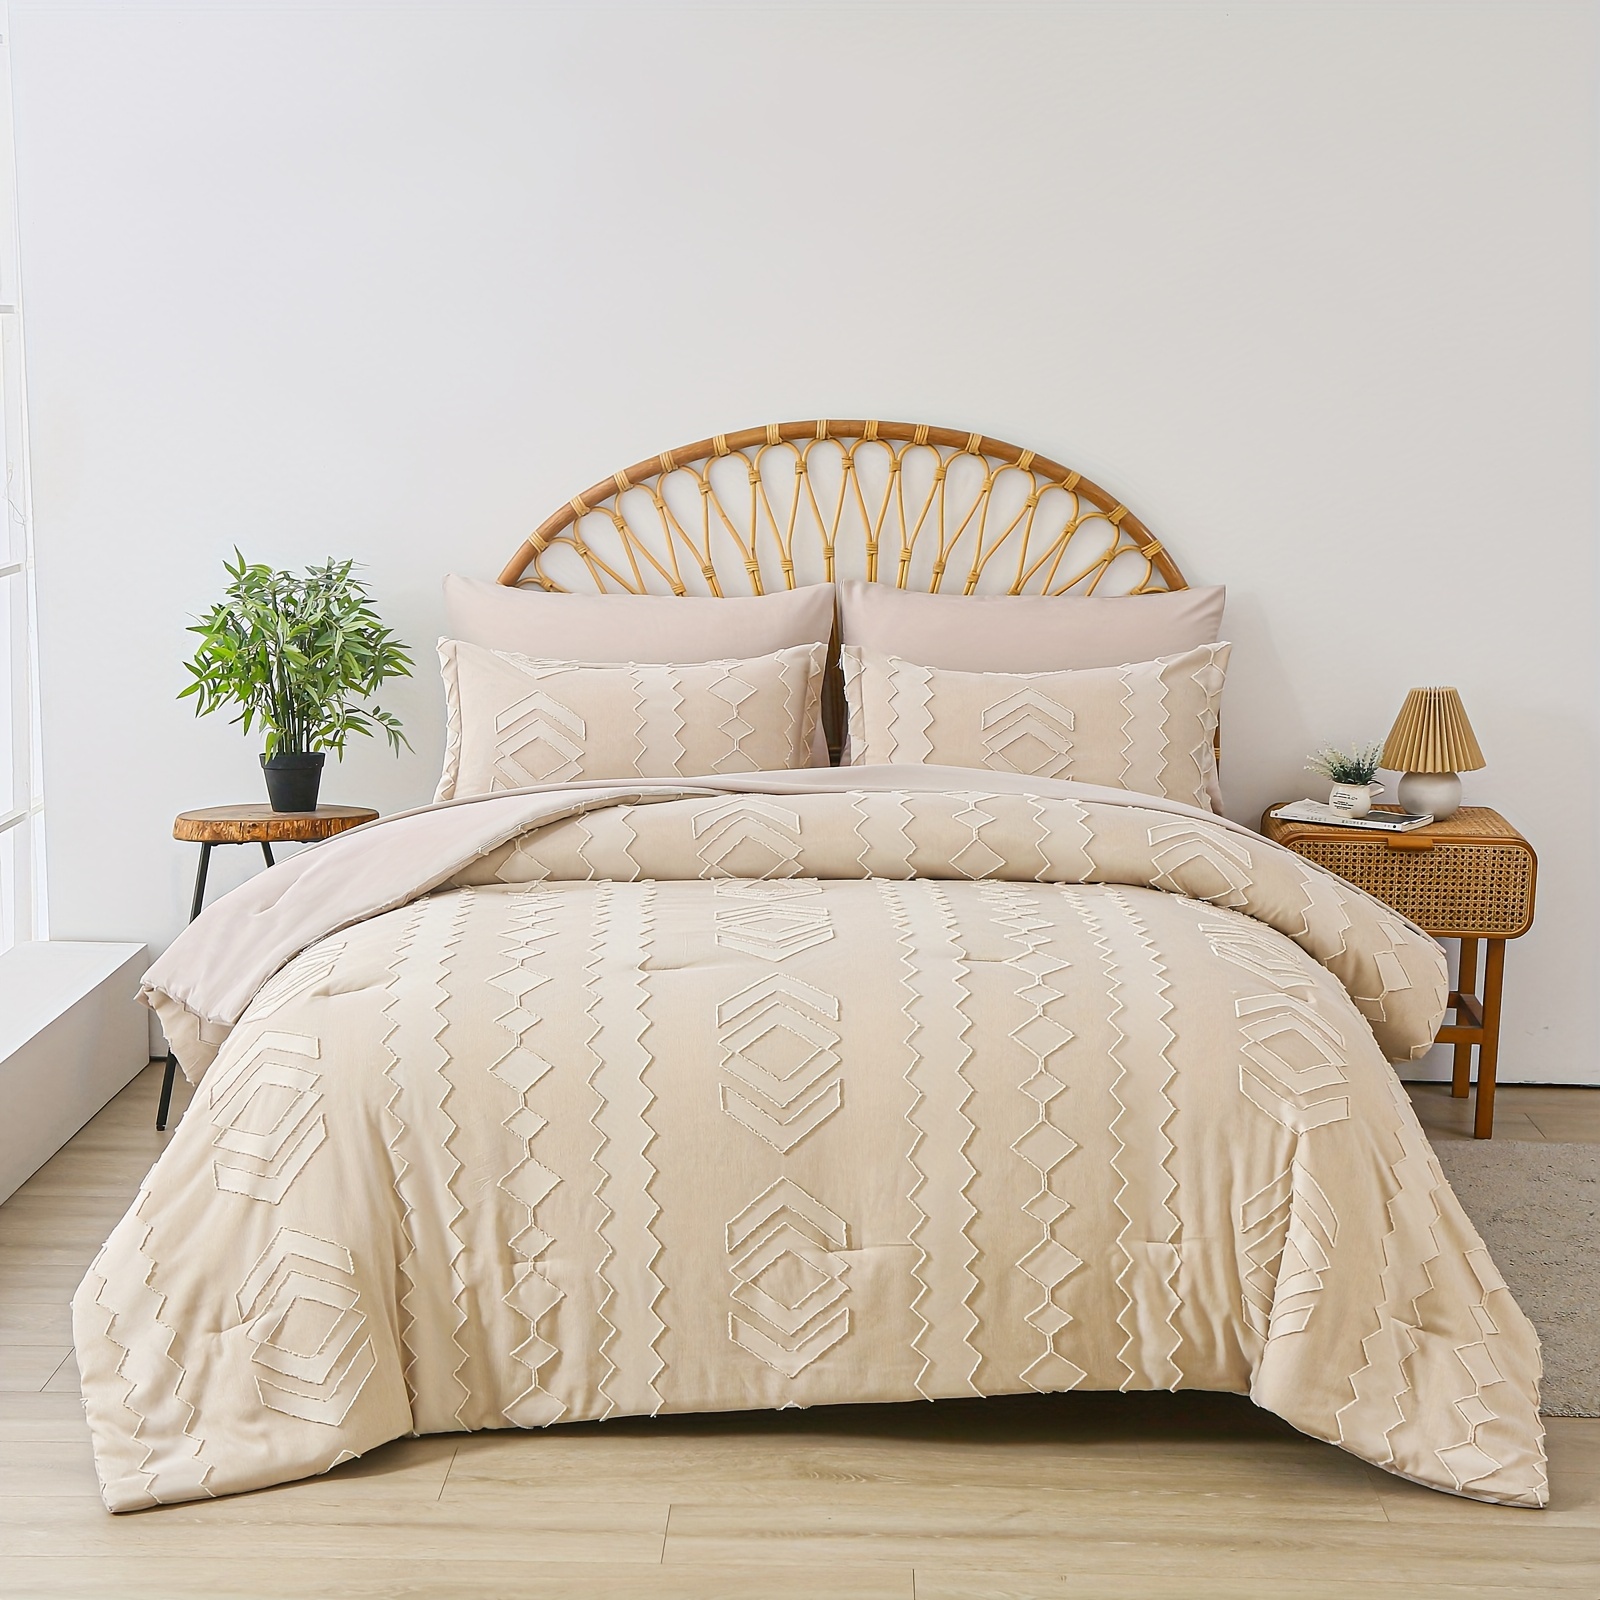 

7pcs Boho Comforter Sets, Cream Farmhouse Bedding Set, Queen/king Size Bed In A Bag, Soft Microfiber Lightweight Bedding Set For All Seasons